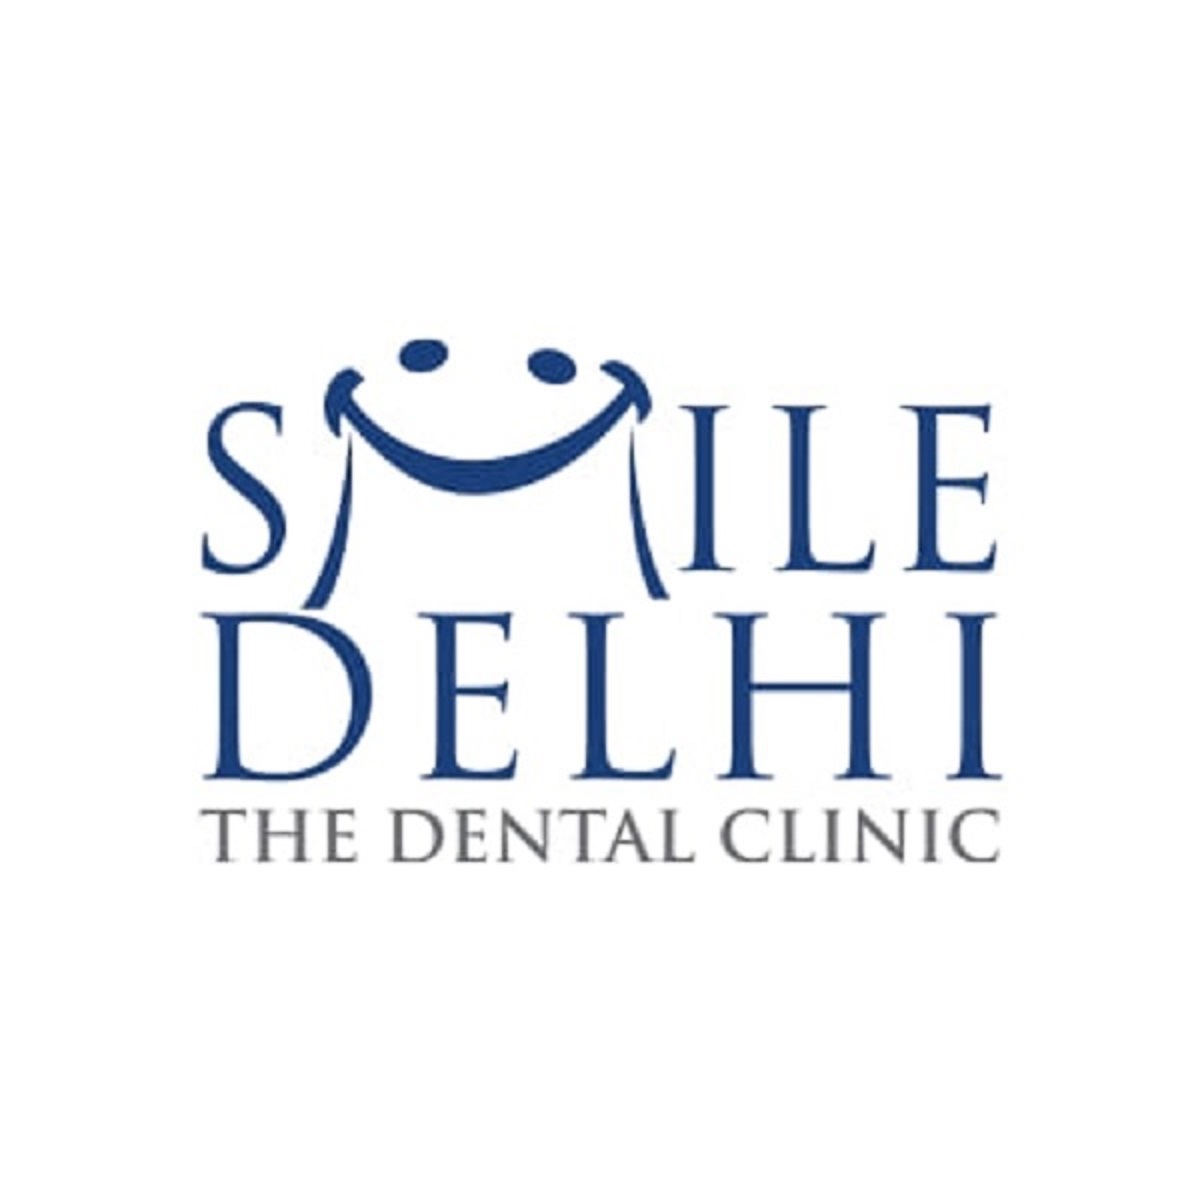 Smile Delhi - The Dental Clinic|Diagnostic centre|Medical Services